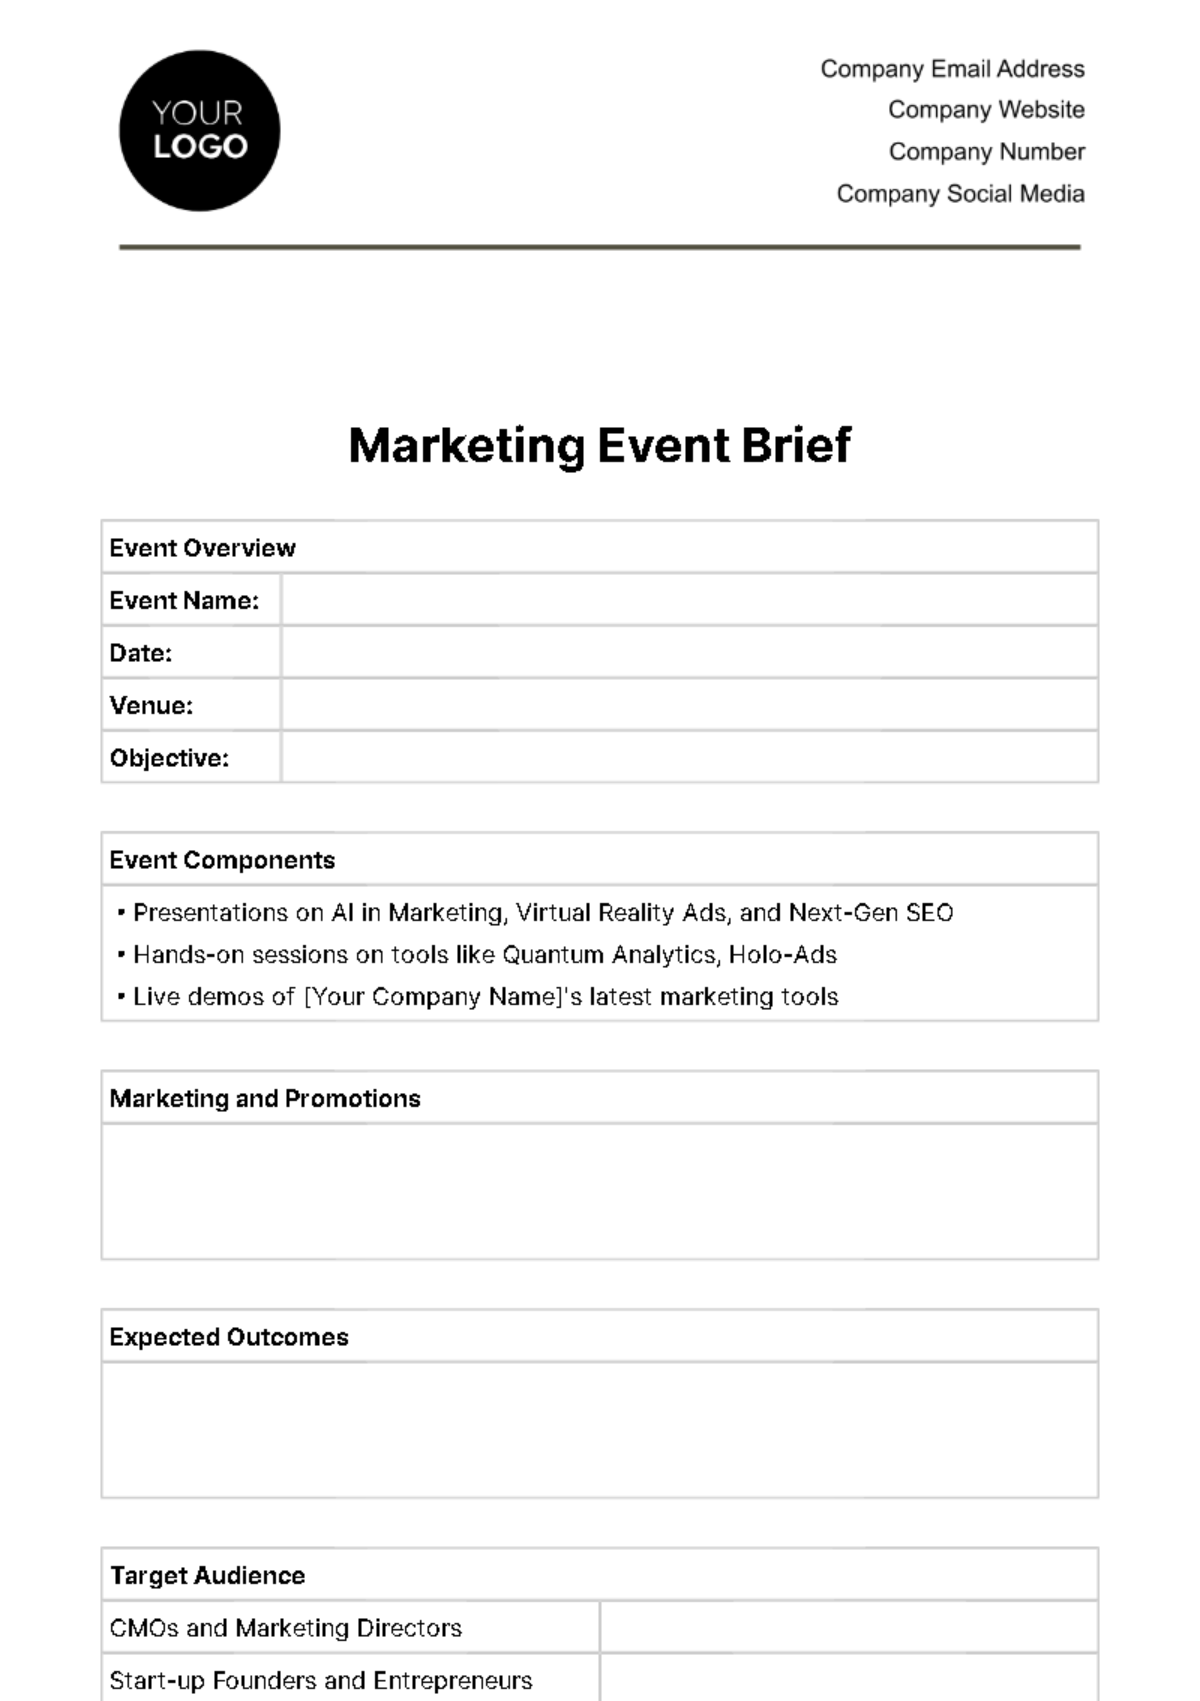 Free Marketing Event Brief Template